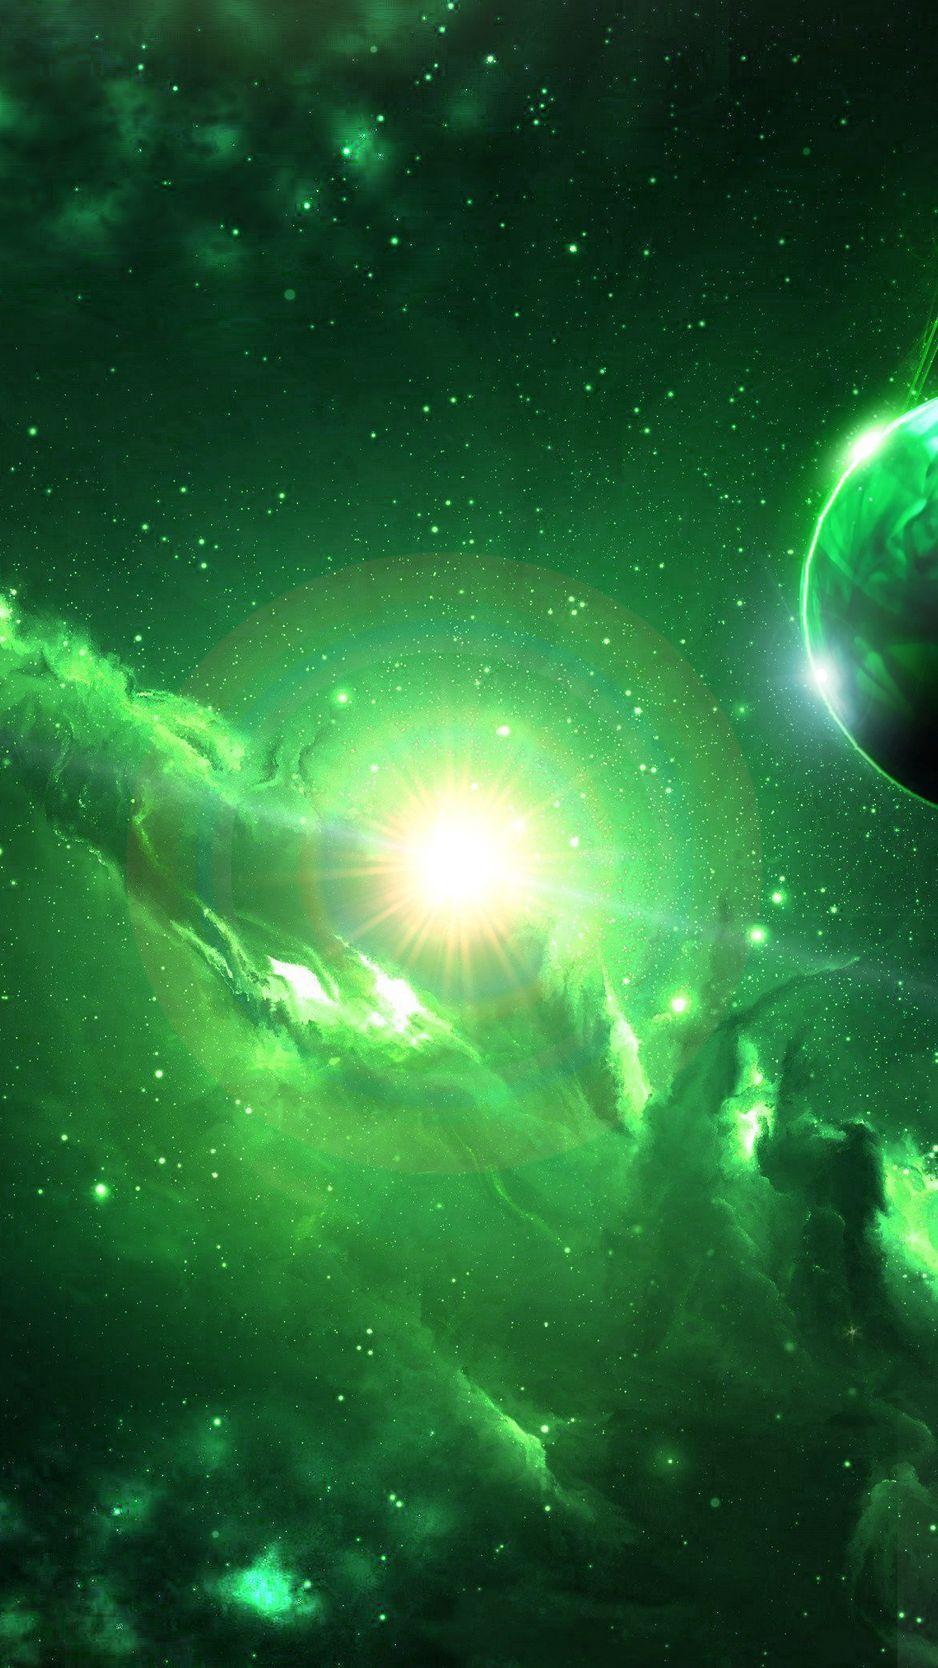 Space wallpaper - Green galaxy by dazalicious on DeviantArt